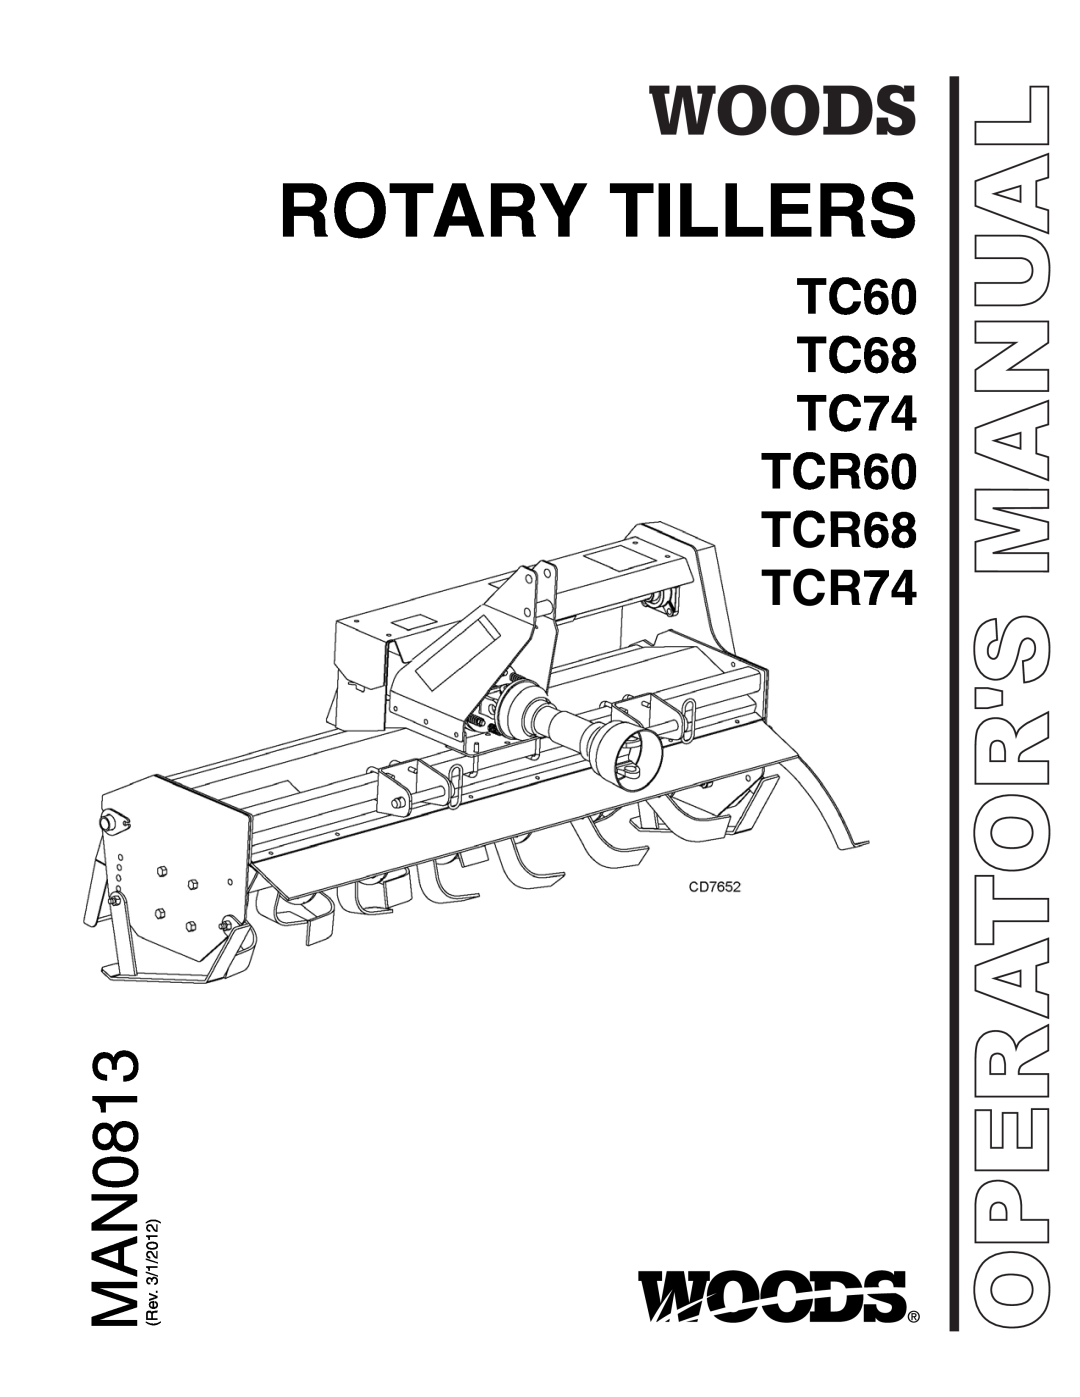 Woods Equipment manual Rotary Tillers, TC60 TC68 TC74 TCR60 TCR68 TCR74, Operators Manual 